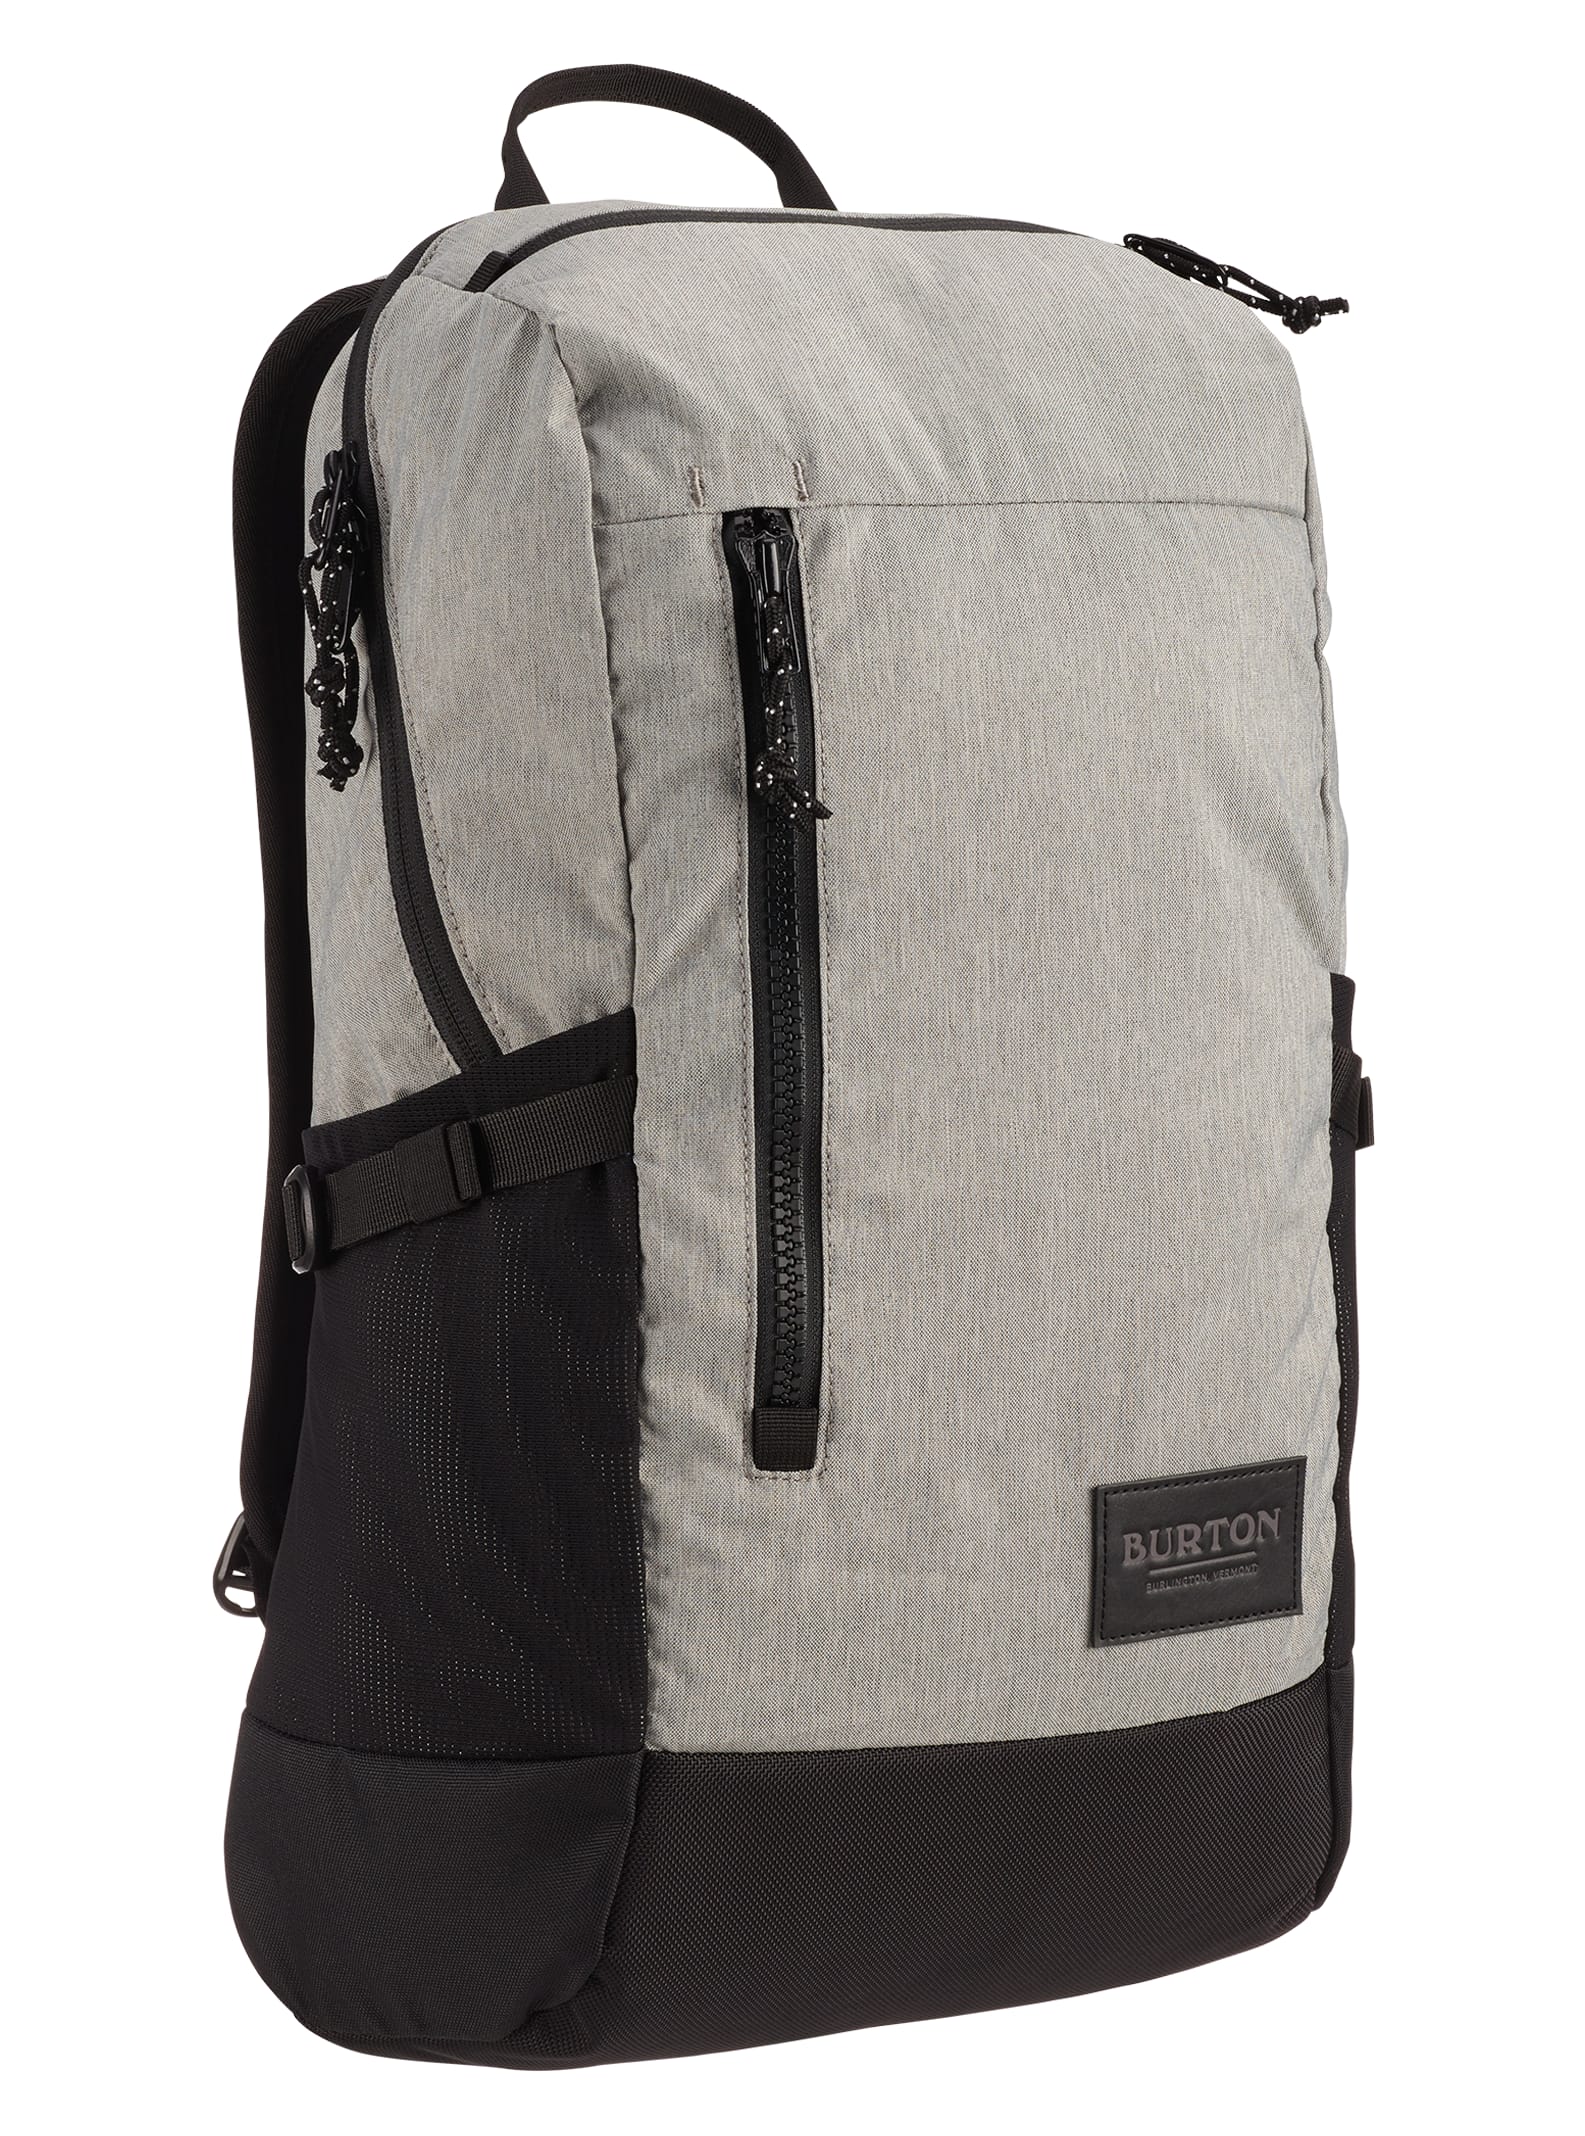 Burton Prospect 2.0 20L Backpack | Burton.com Spring 2022 US